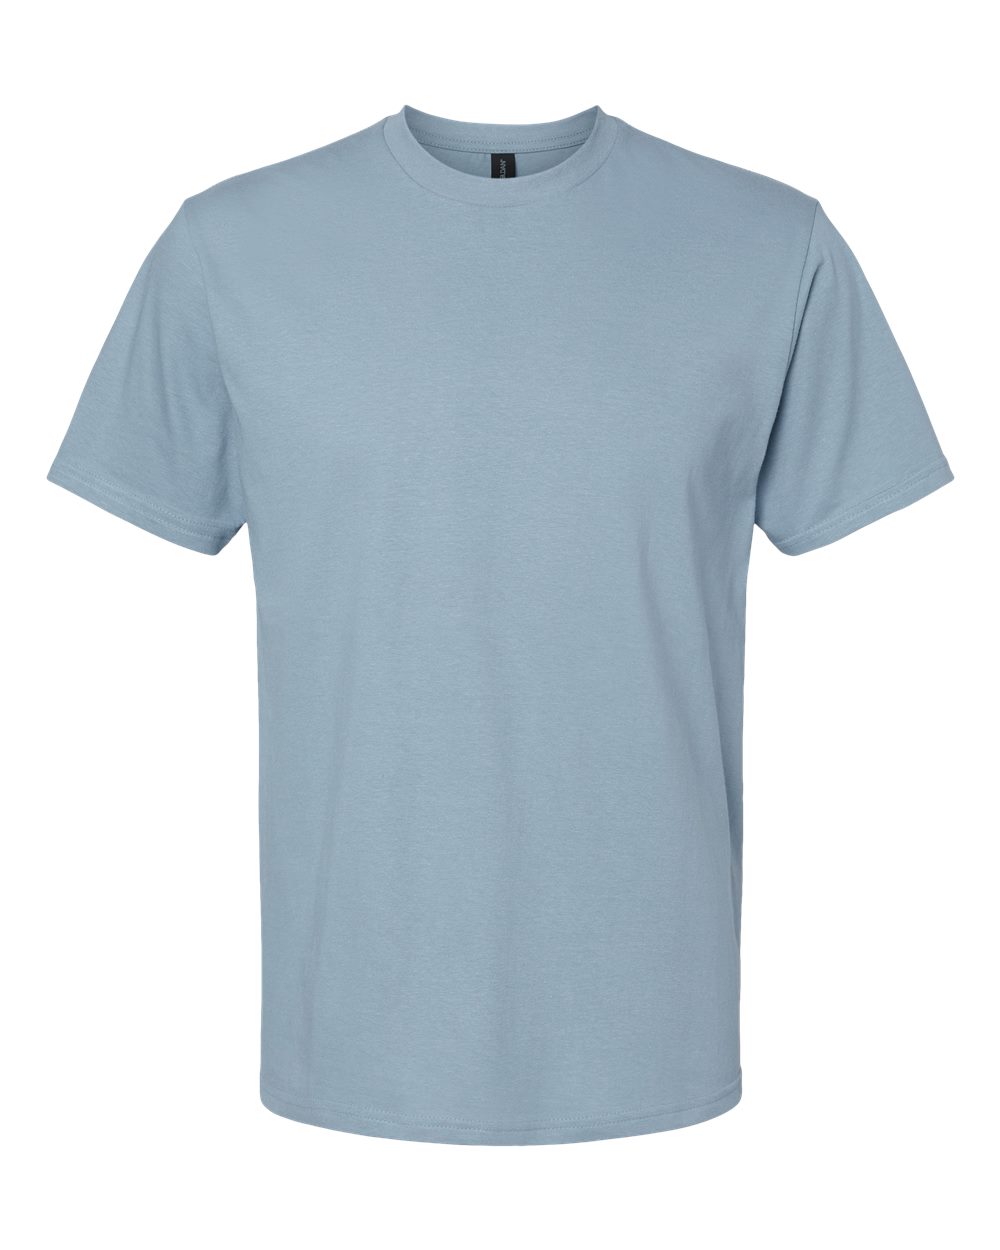 Gildan 65000 - Softstyle Adult Midweight T-Shirt $4.76 - T-Shirts